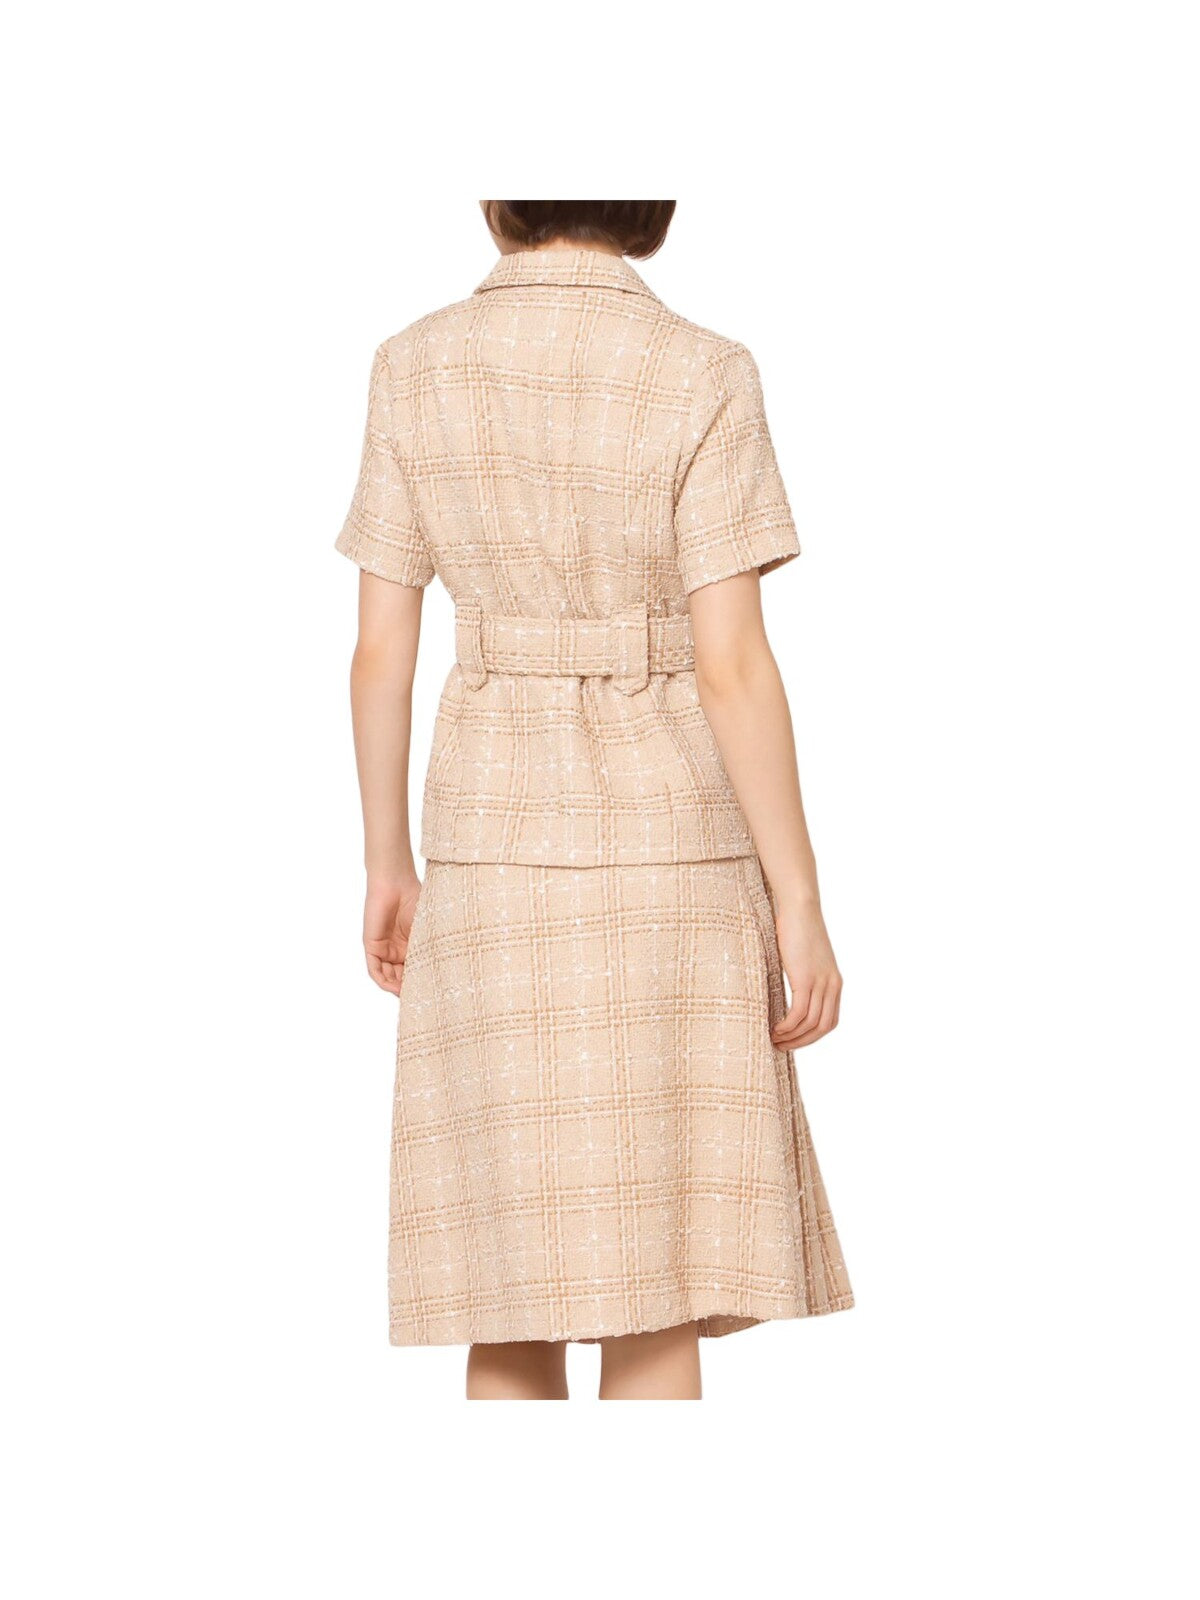 GRACIA Womens Beige Zippered Pleated Lined Knee Length Wear To Work A-Line Skirt S